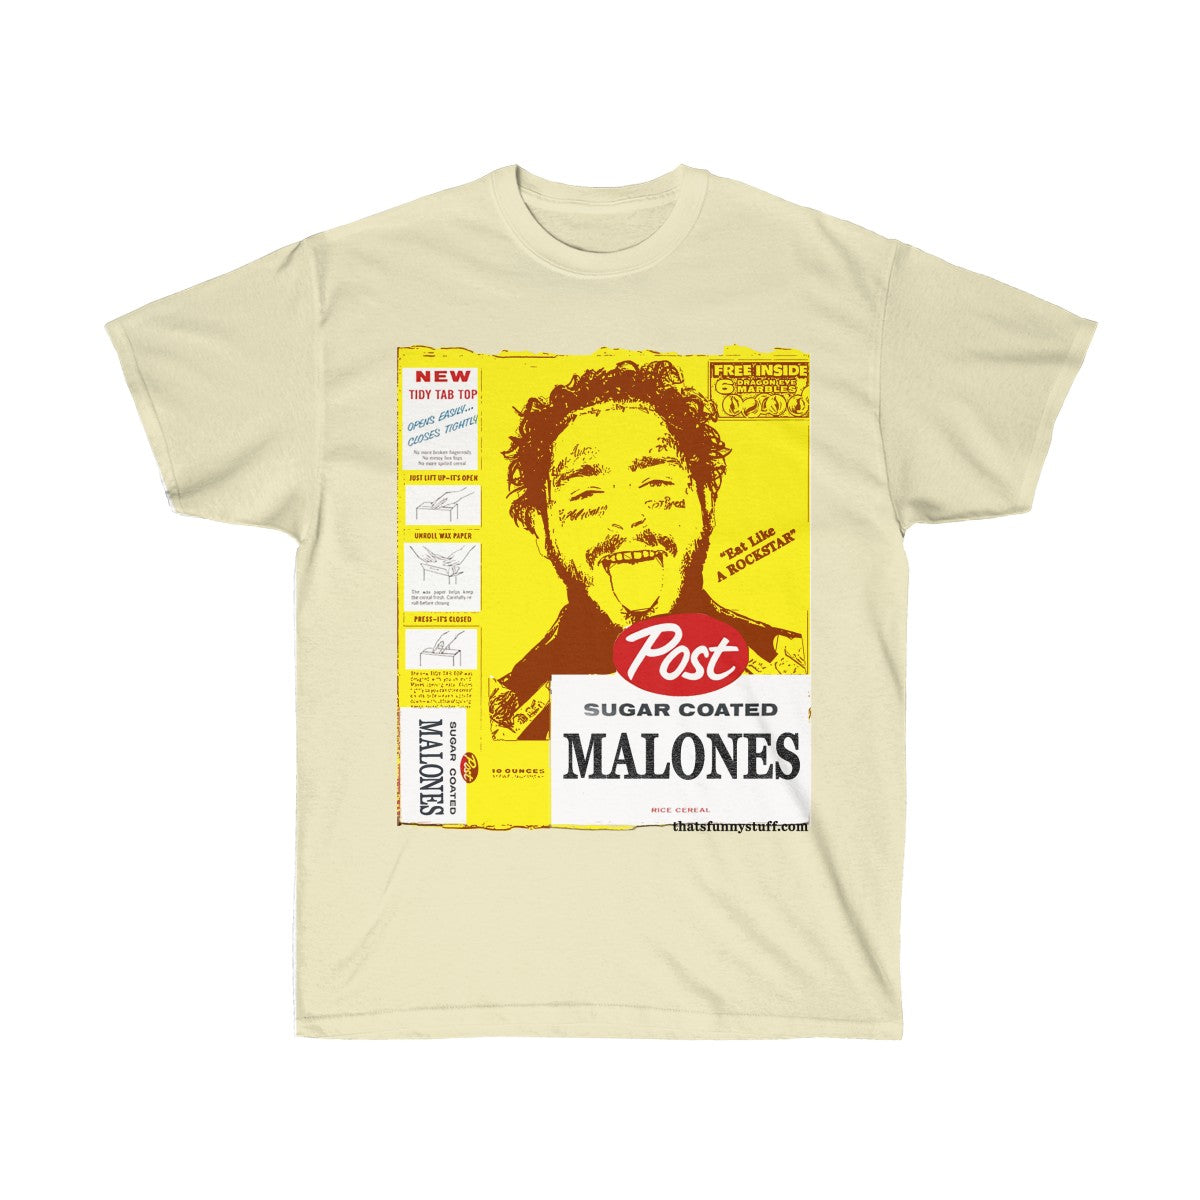 Rockstar Post Malone Shirt